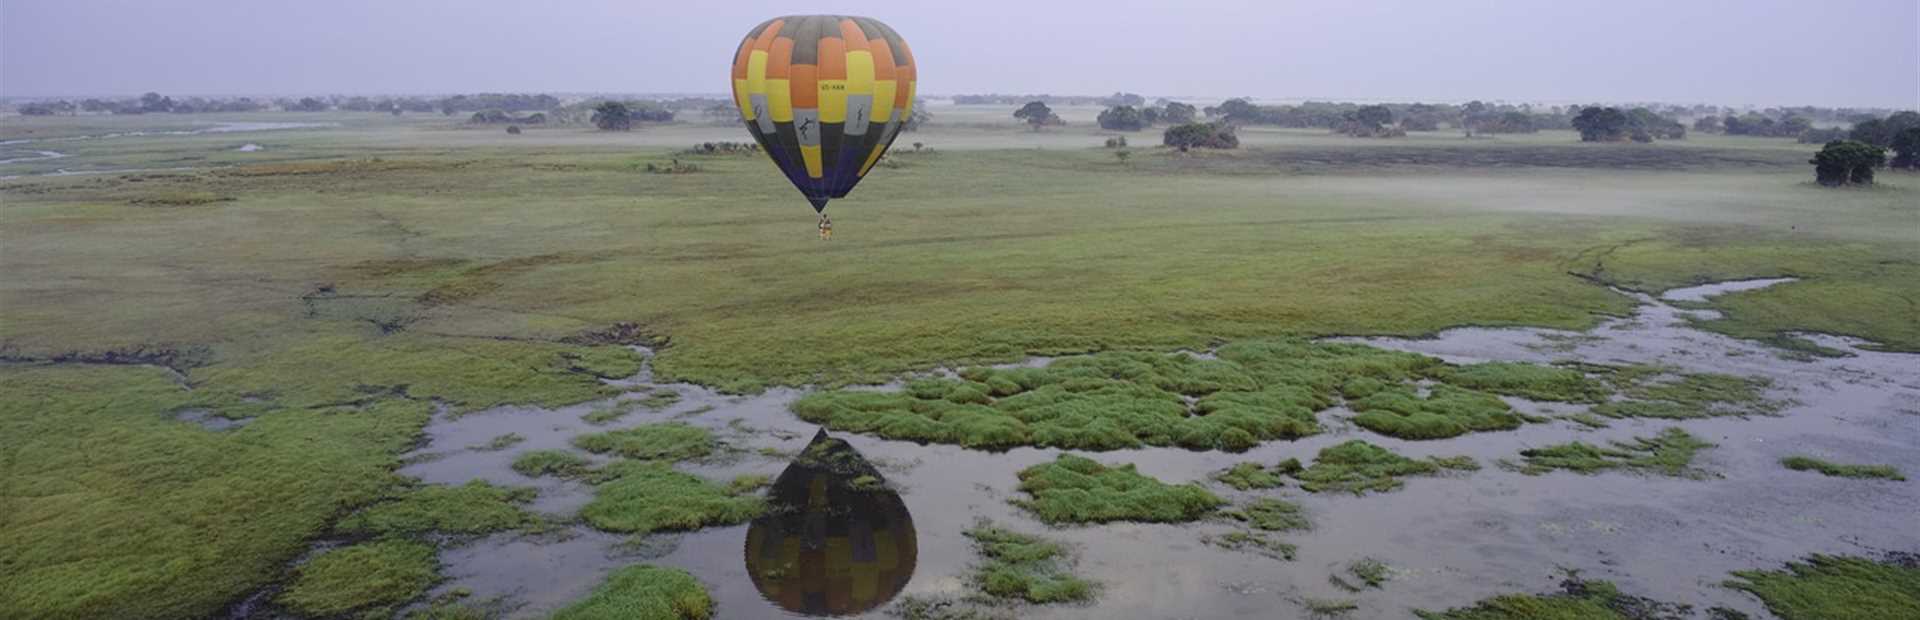 Zambia - Busanga & Ballooning